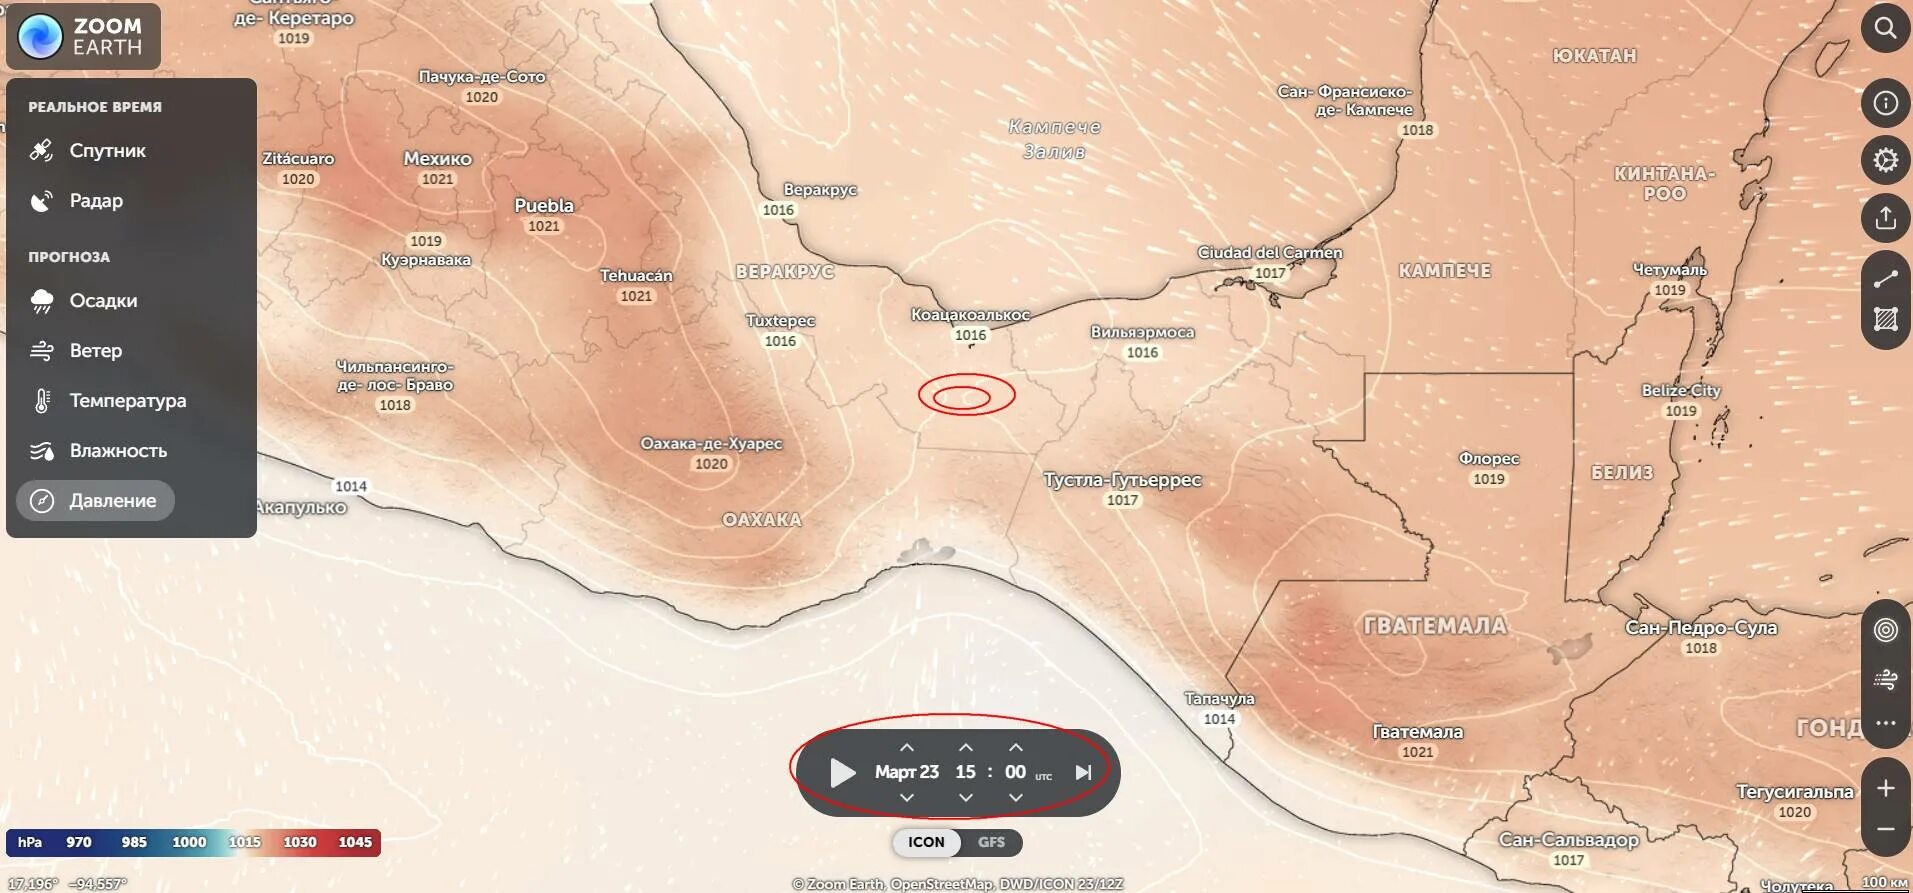 Карта землетрясений в турции. Землетрясение в Турции 2023 года на карте. Сейсмическая карта Турции 2023. Карта землетрясений 2023. Карта землетрясения прогнозная.